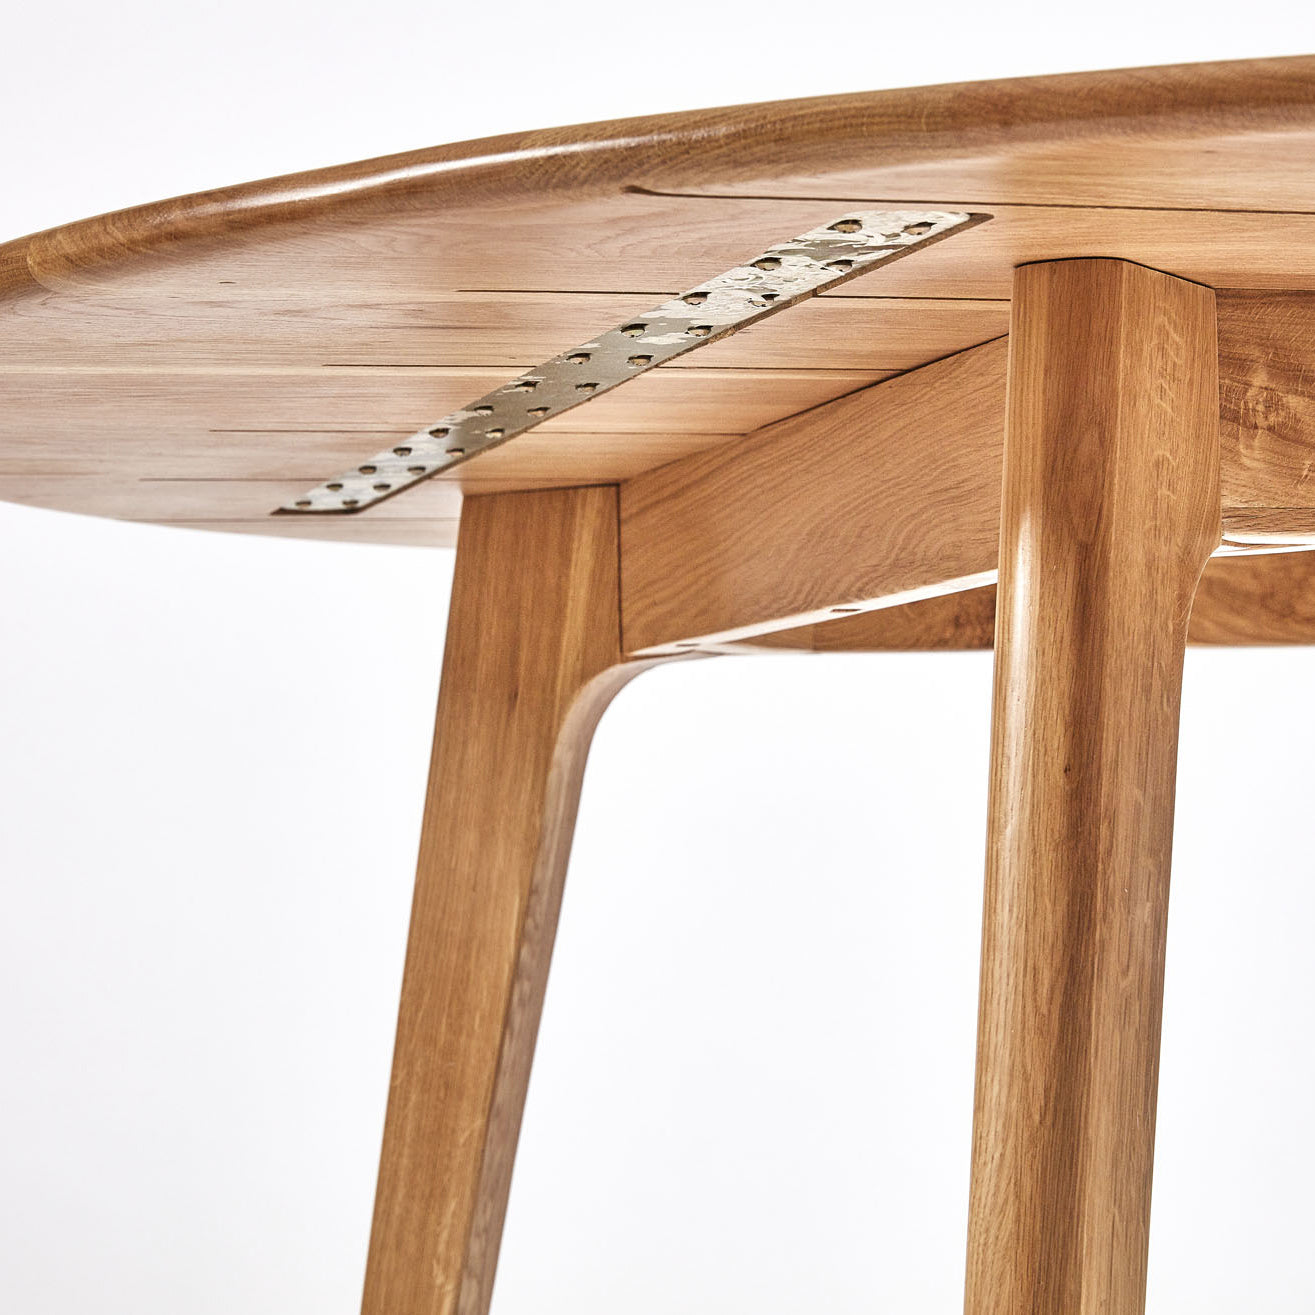 Convair Round Oak Dining Table - 110cm - Notbrand